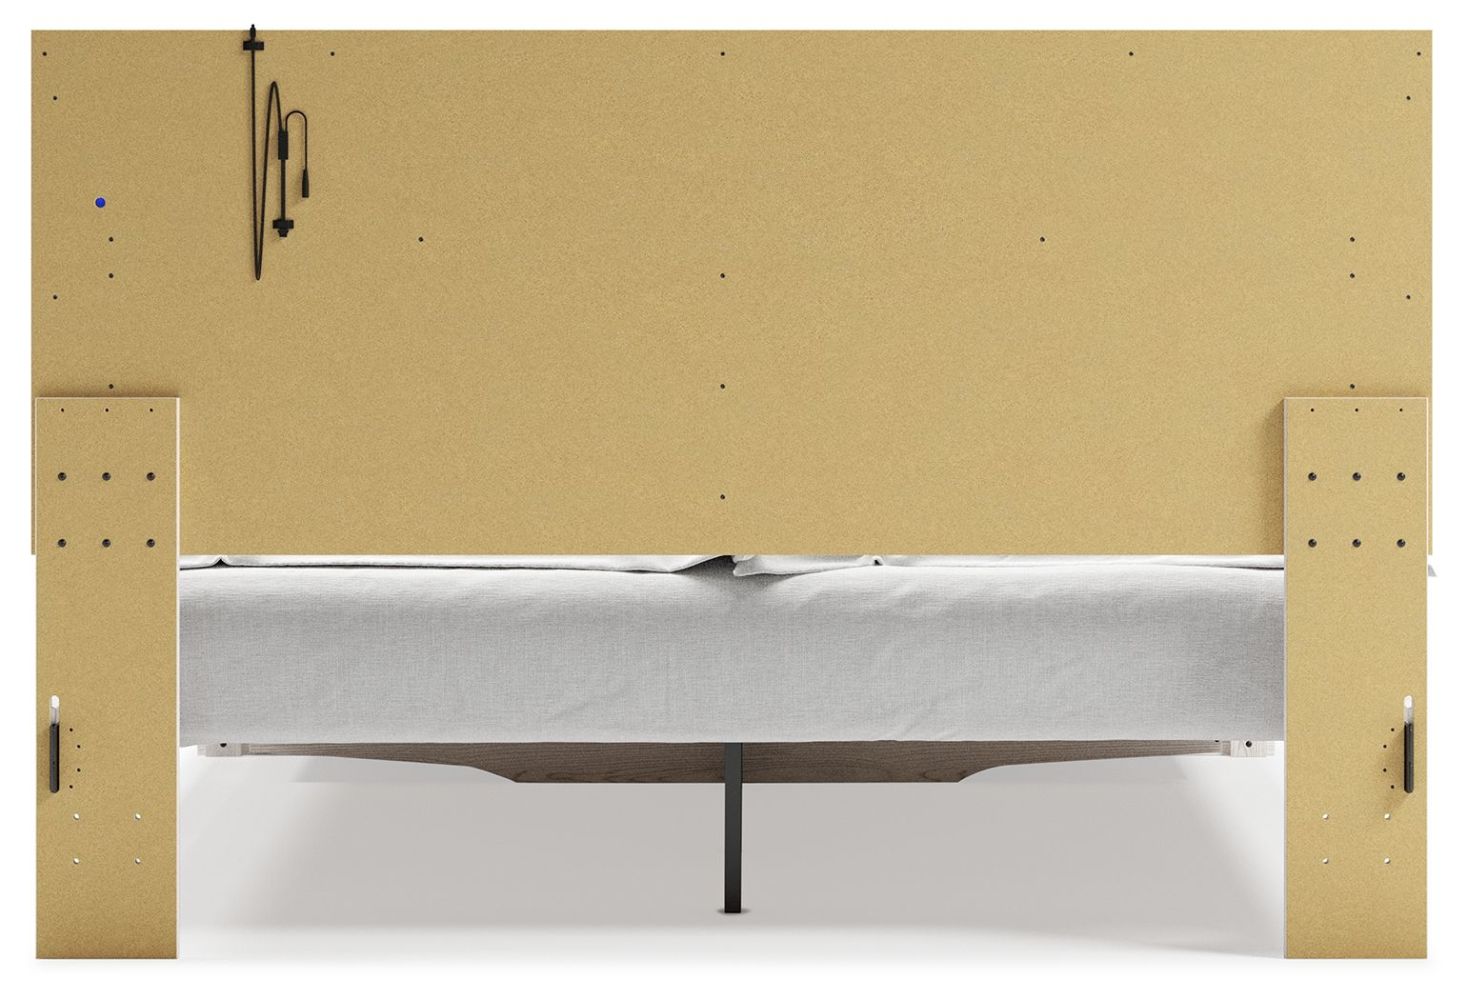 Altyra – White – King Upholstered Storage Bed B2640B29